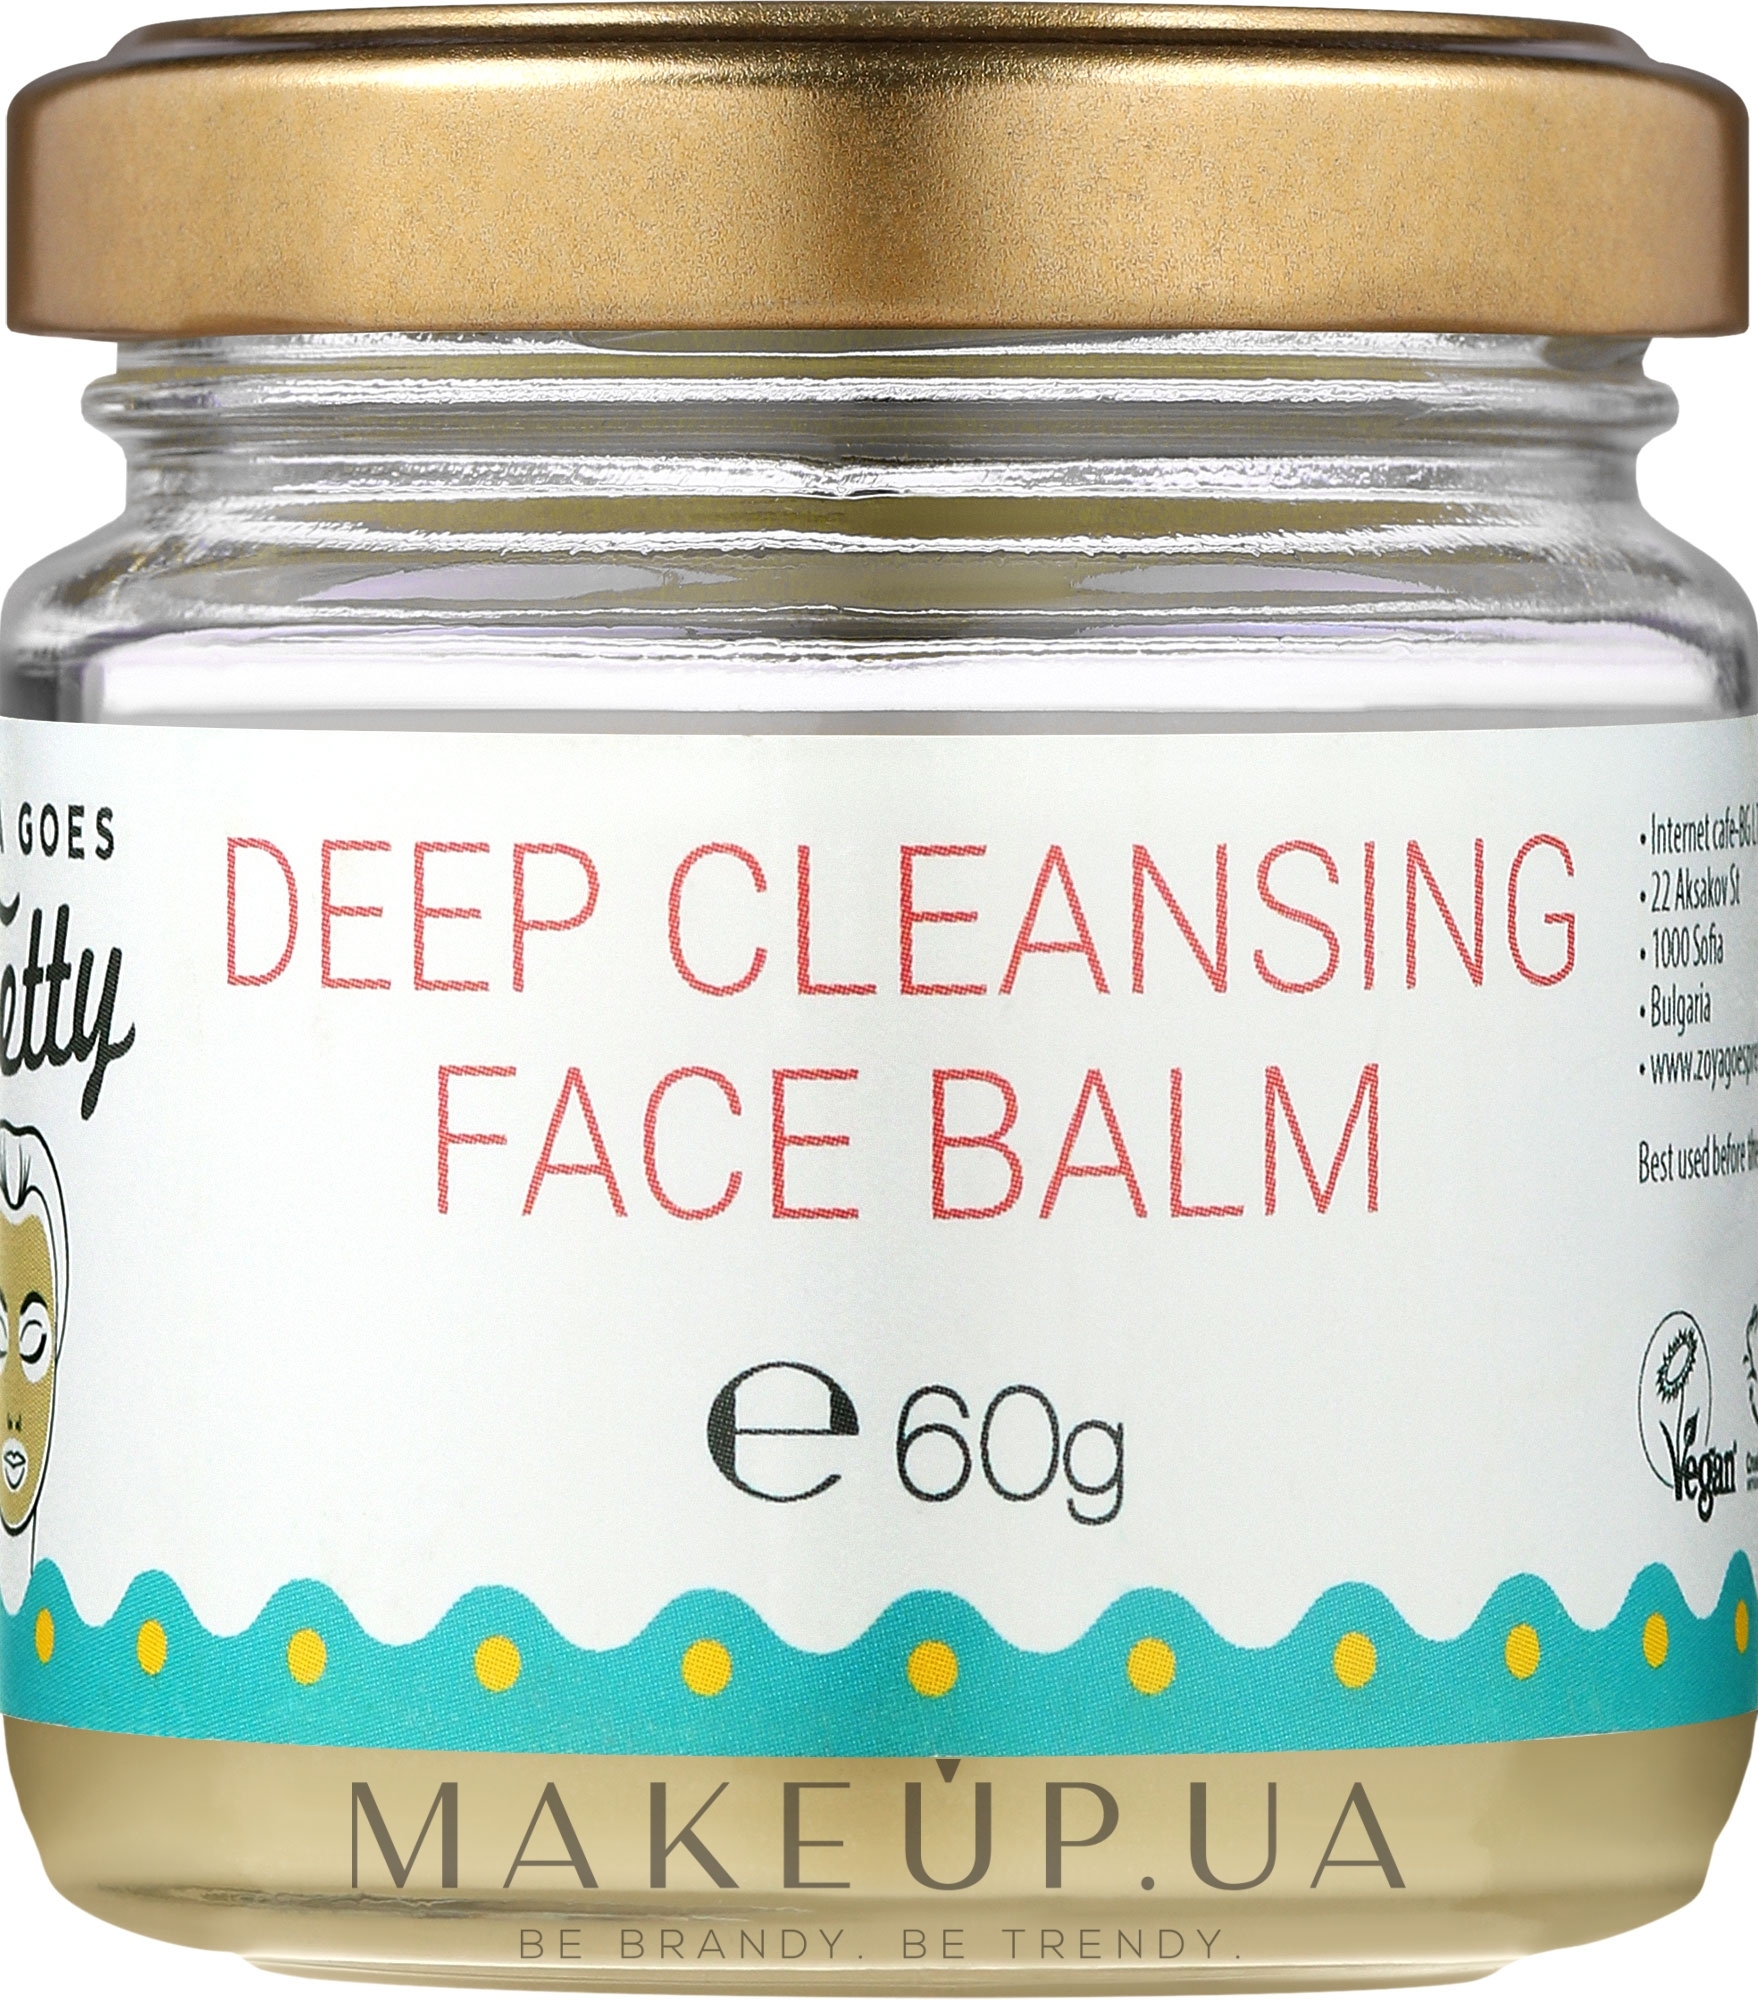 Глубоко очищающий бальзам для лица - Zoya Goes Deep Cleansing Face Balm  — фото 60g